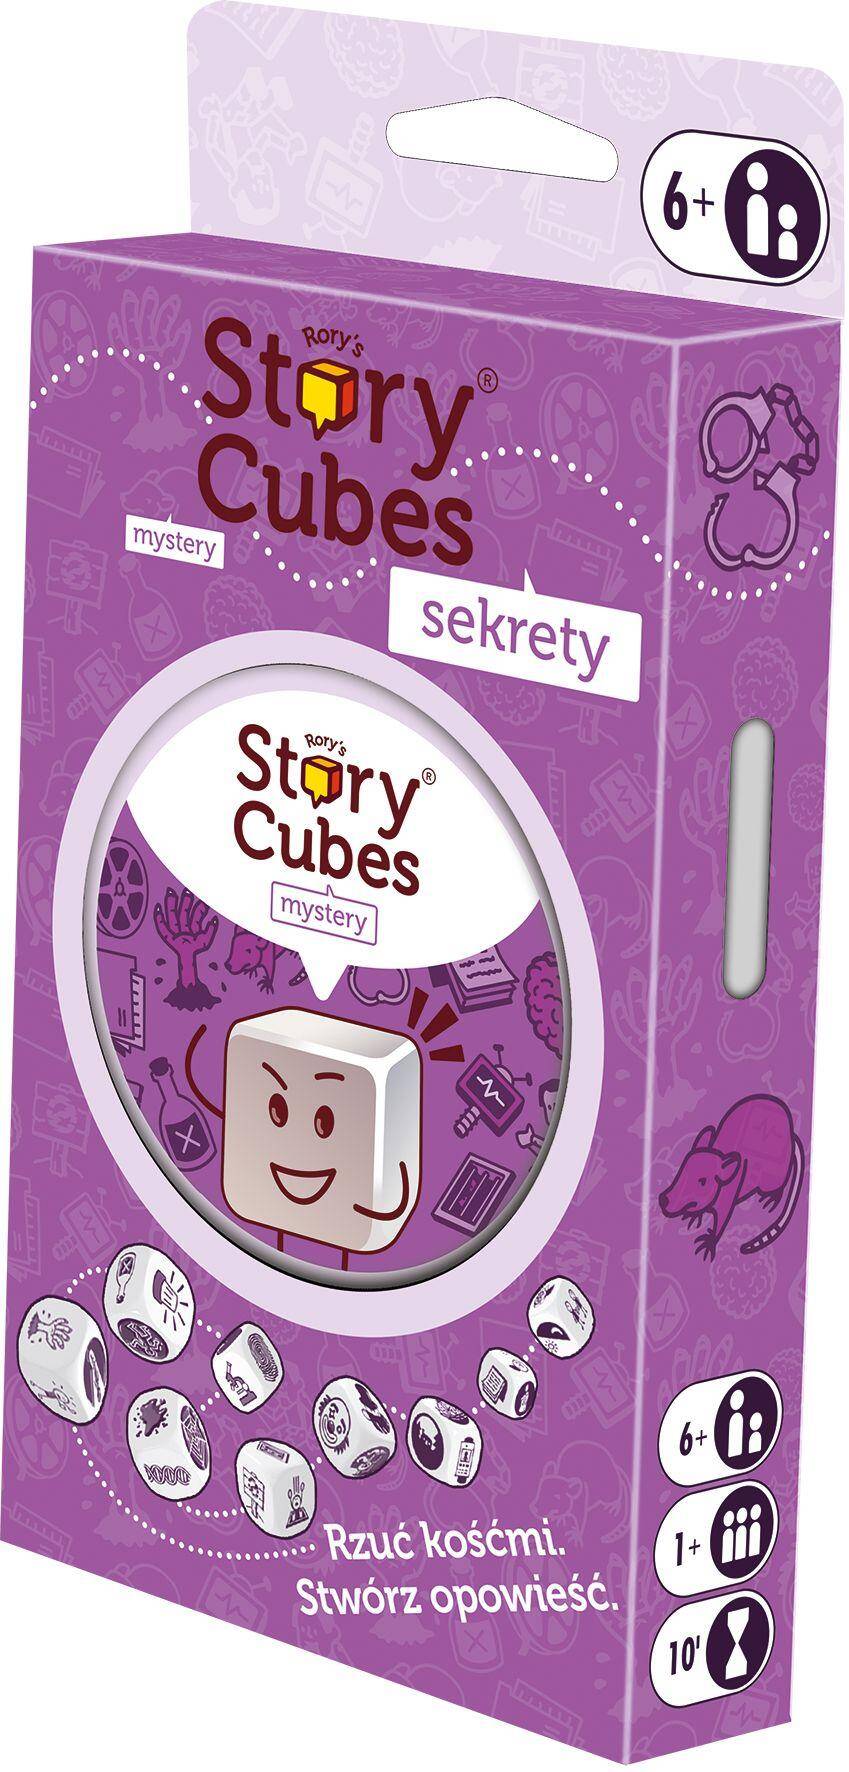 Story Cubes Sekrety nowa edycja